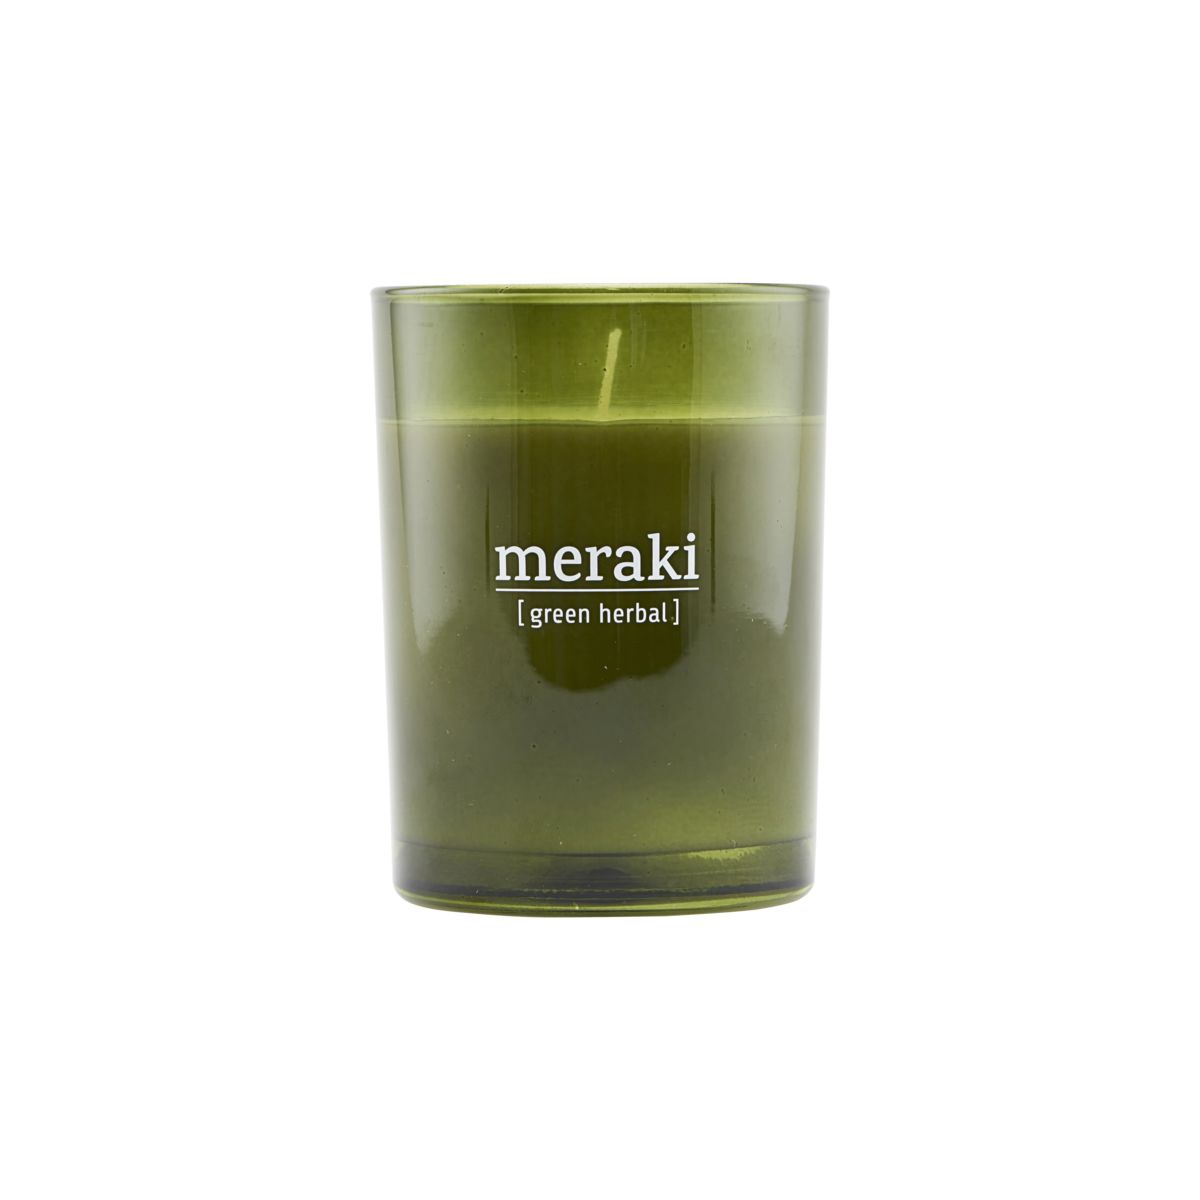 Billede af Meraki Scented Candle Green Herbal 8x10,5 cm. hos Well.dk